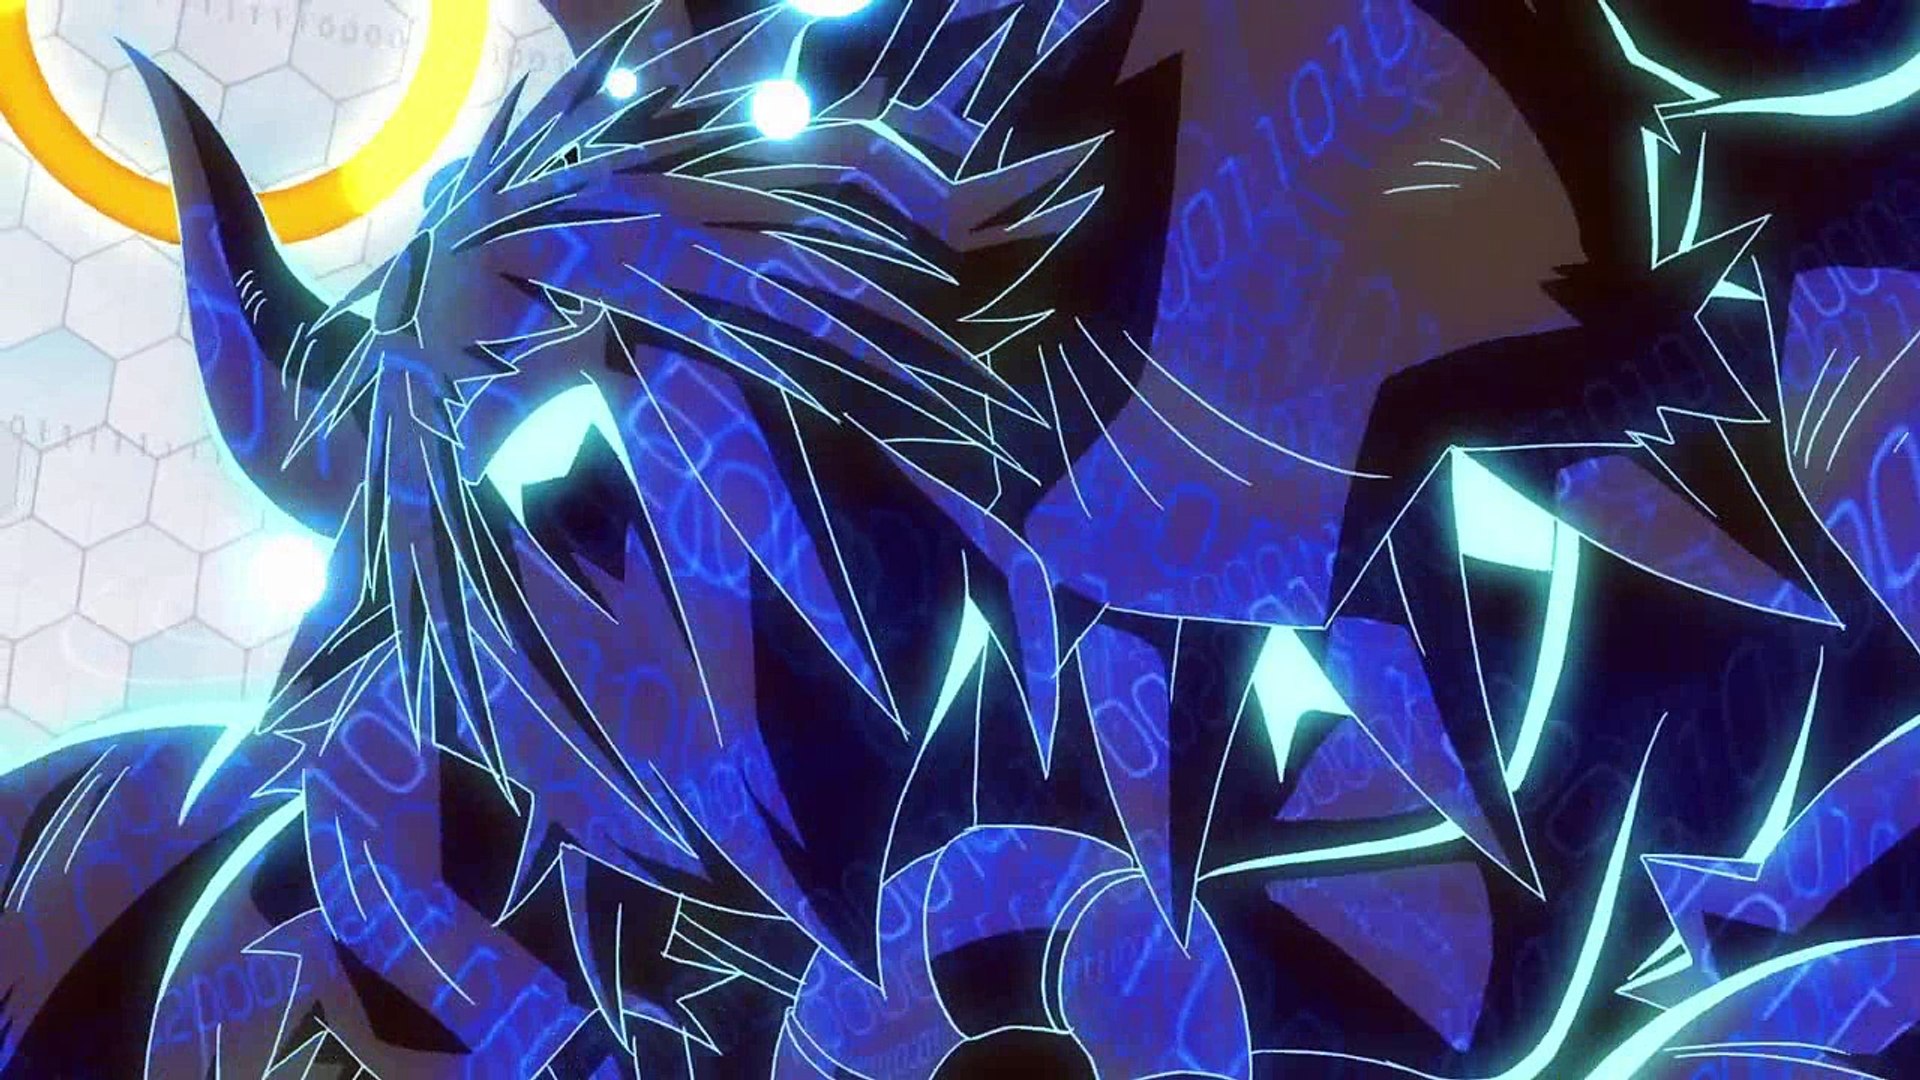 Esto sera canon en Digimon Adventure Tri: Determinación!